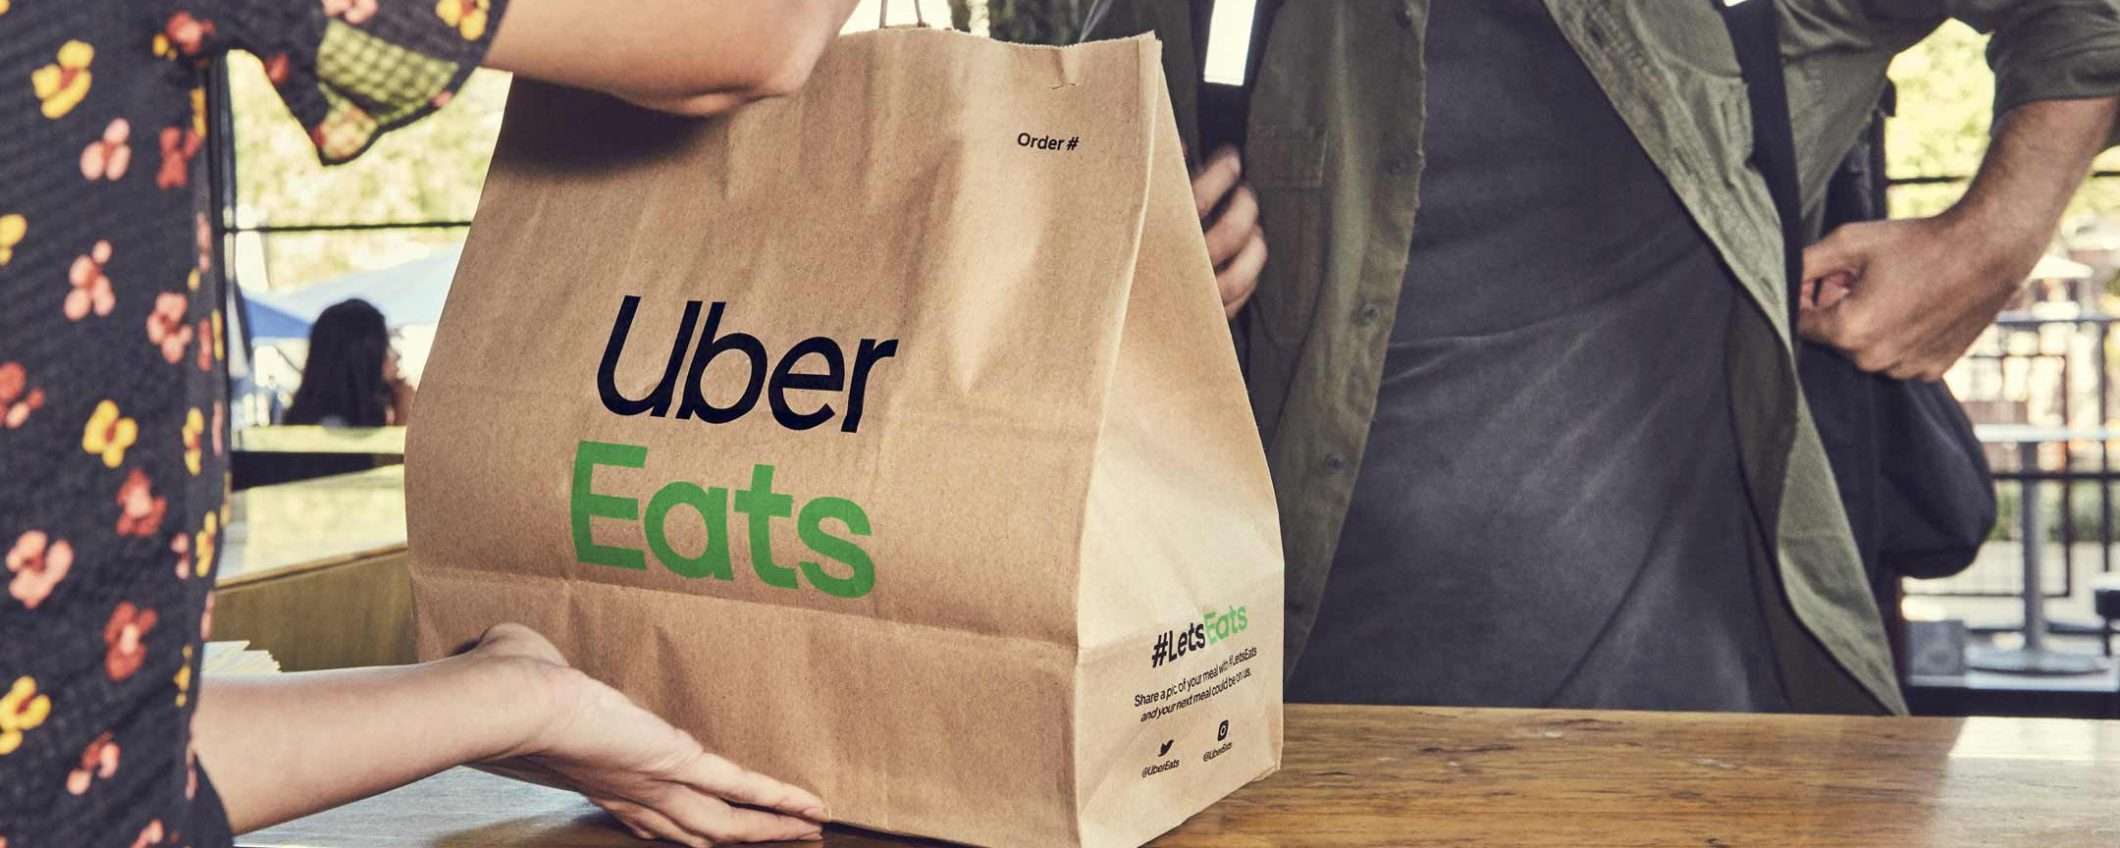 Uber Eats: caporalato sui rider del food delivery